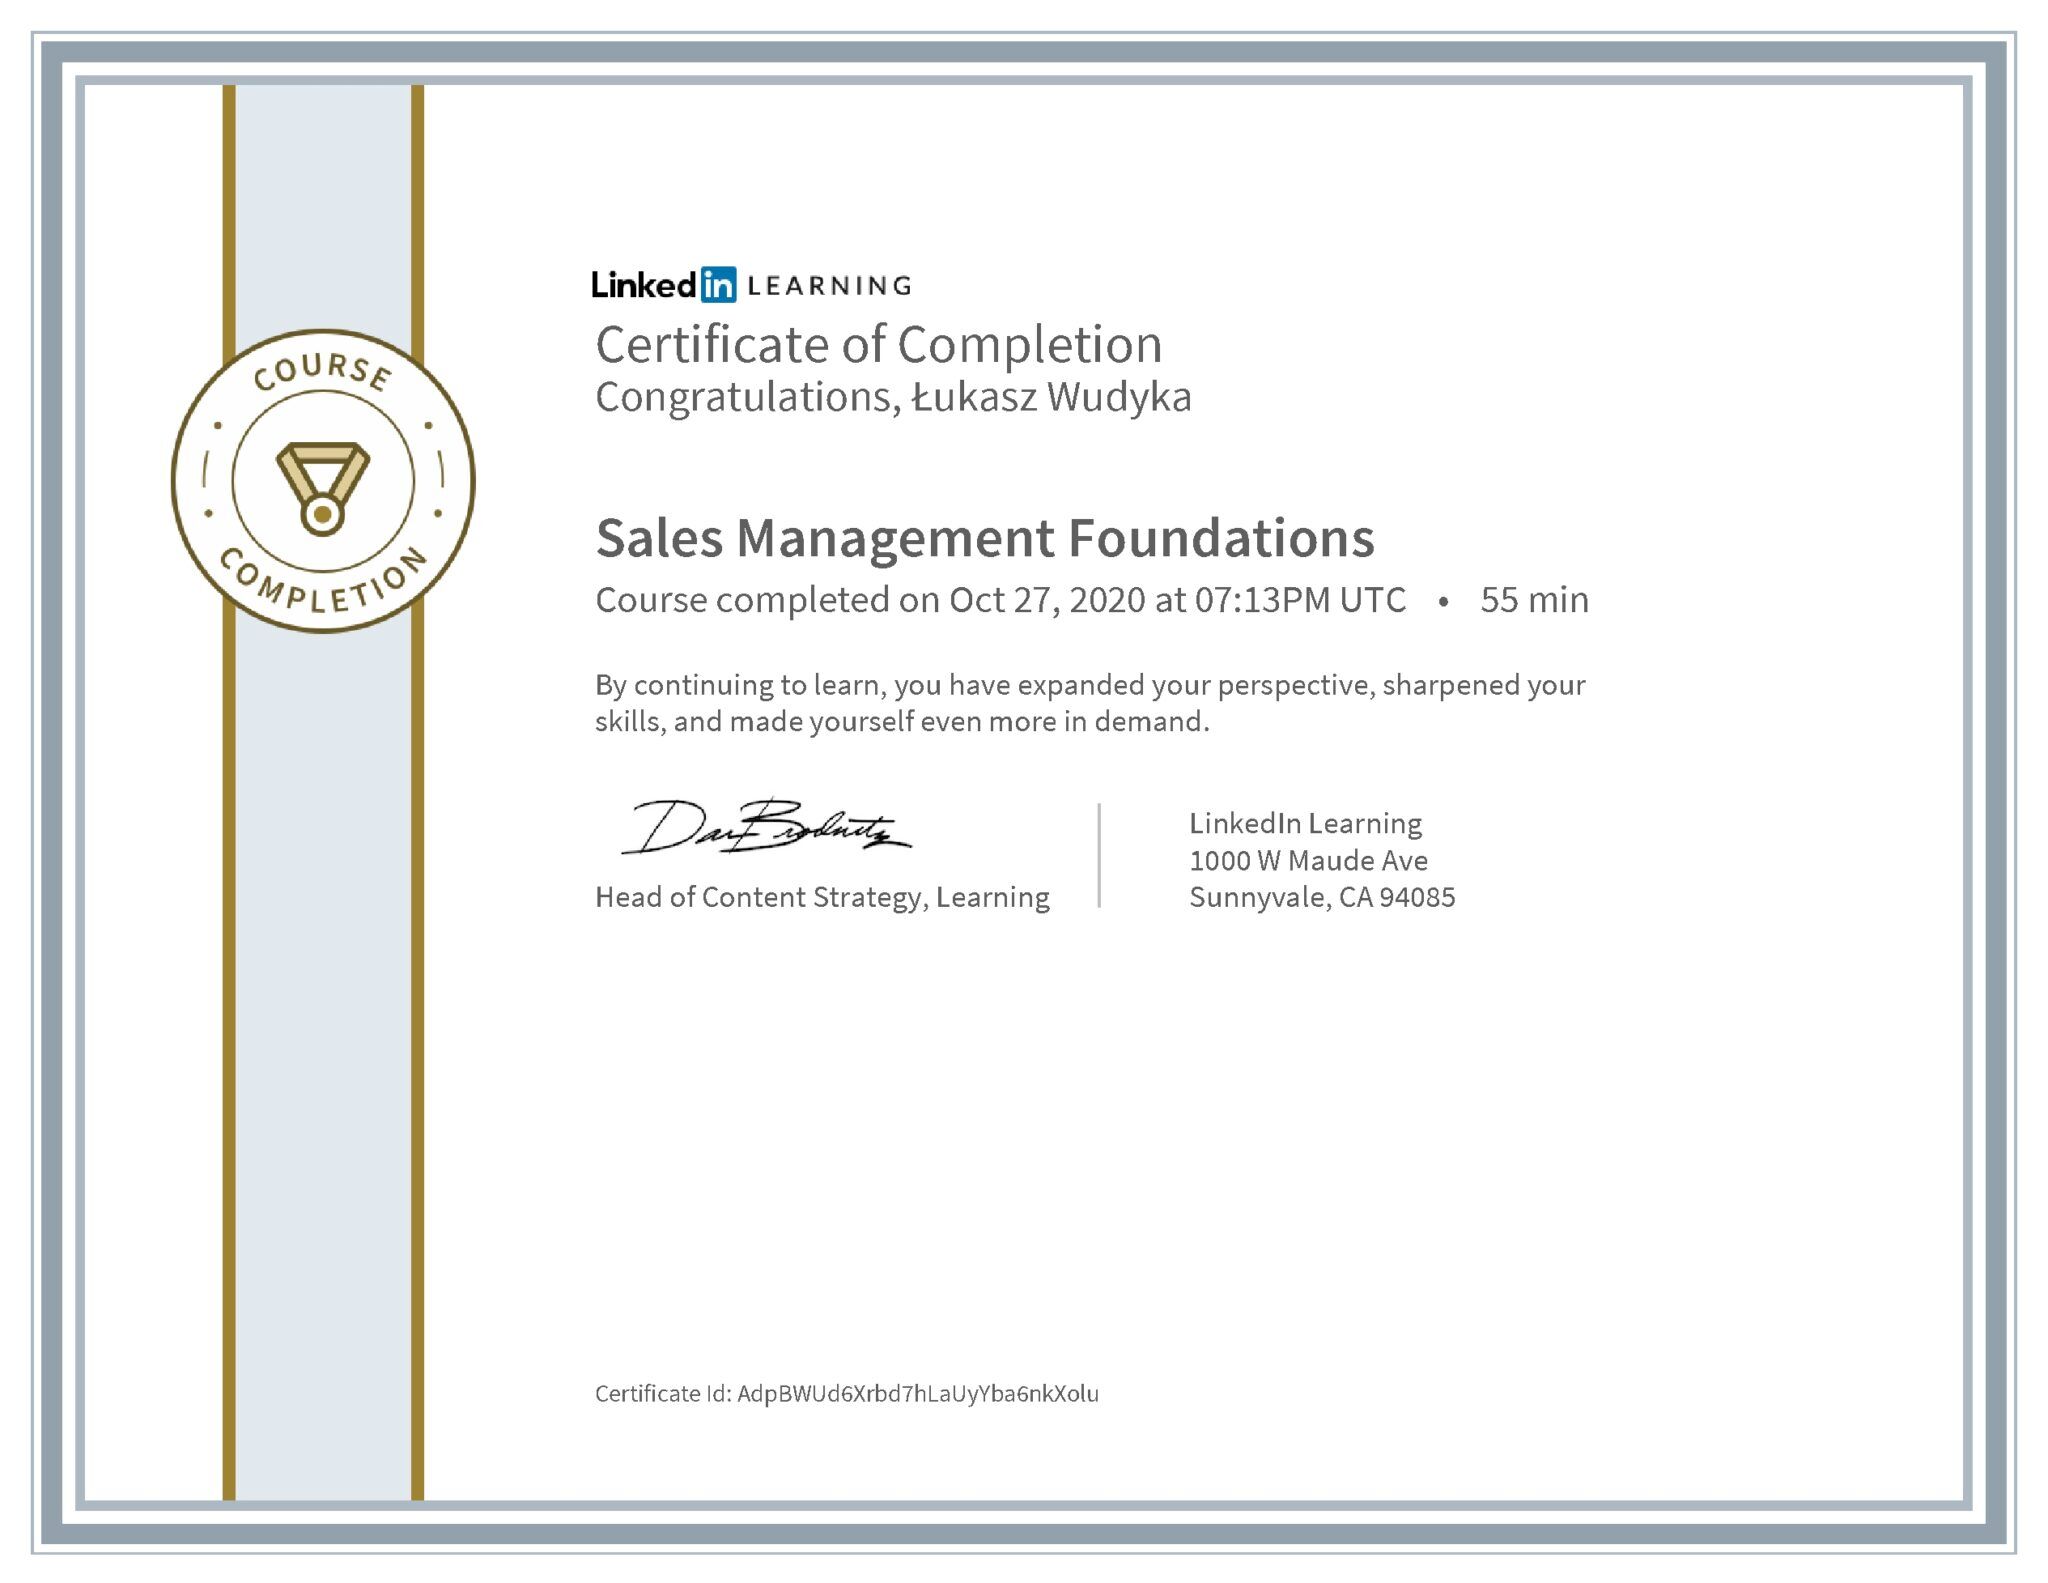 Łukasz Wudyka certyfikat LinkedIn Sales Management Foundations